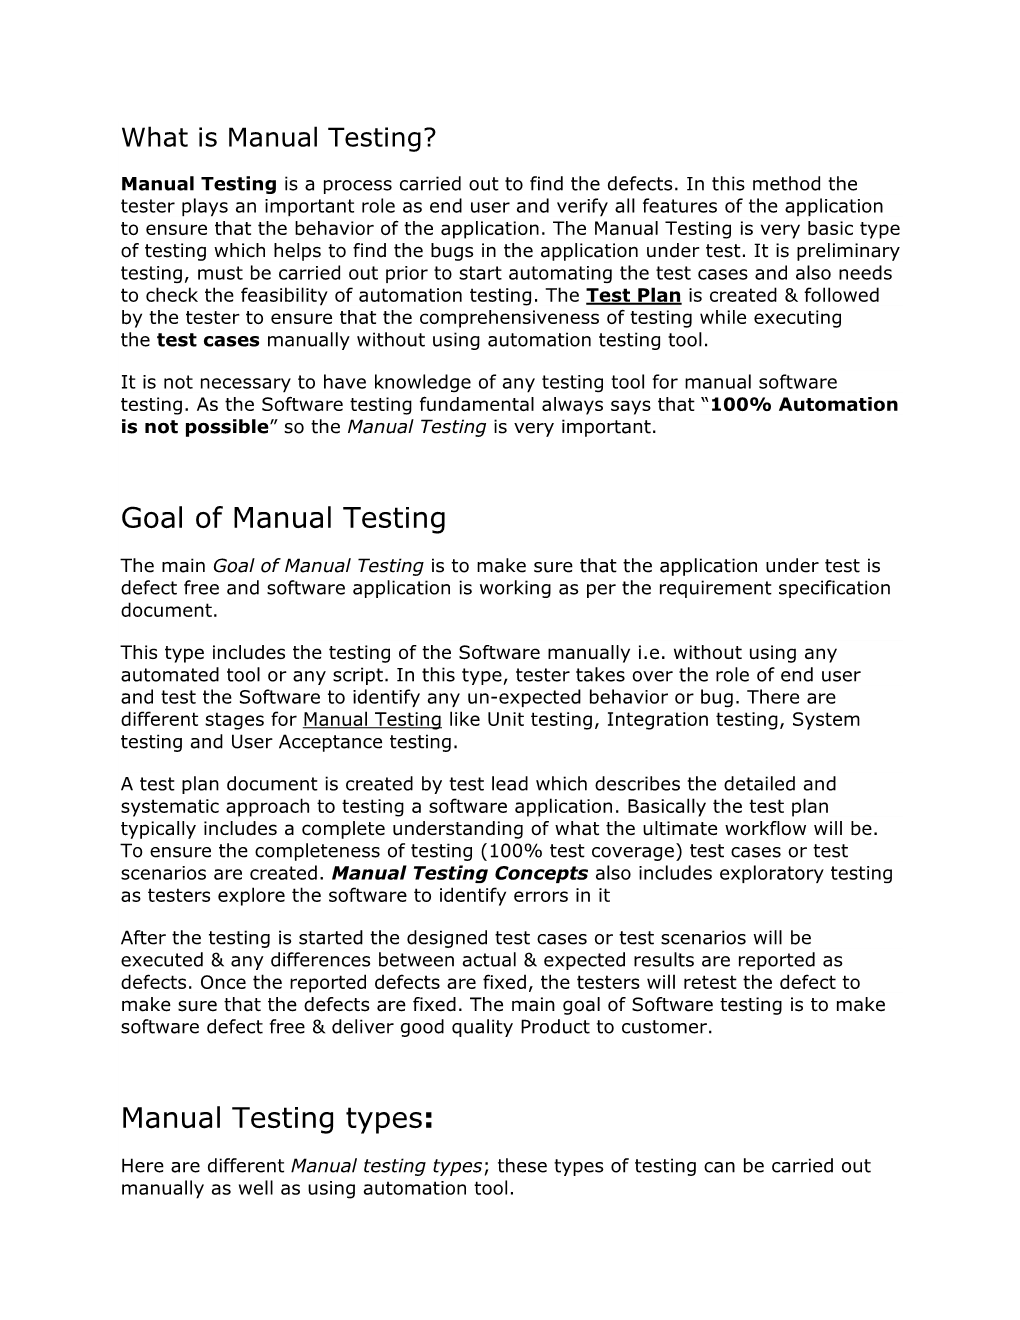 Goal of Manual Testing Manual Testing Types